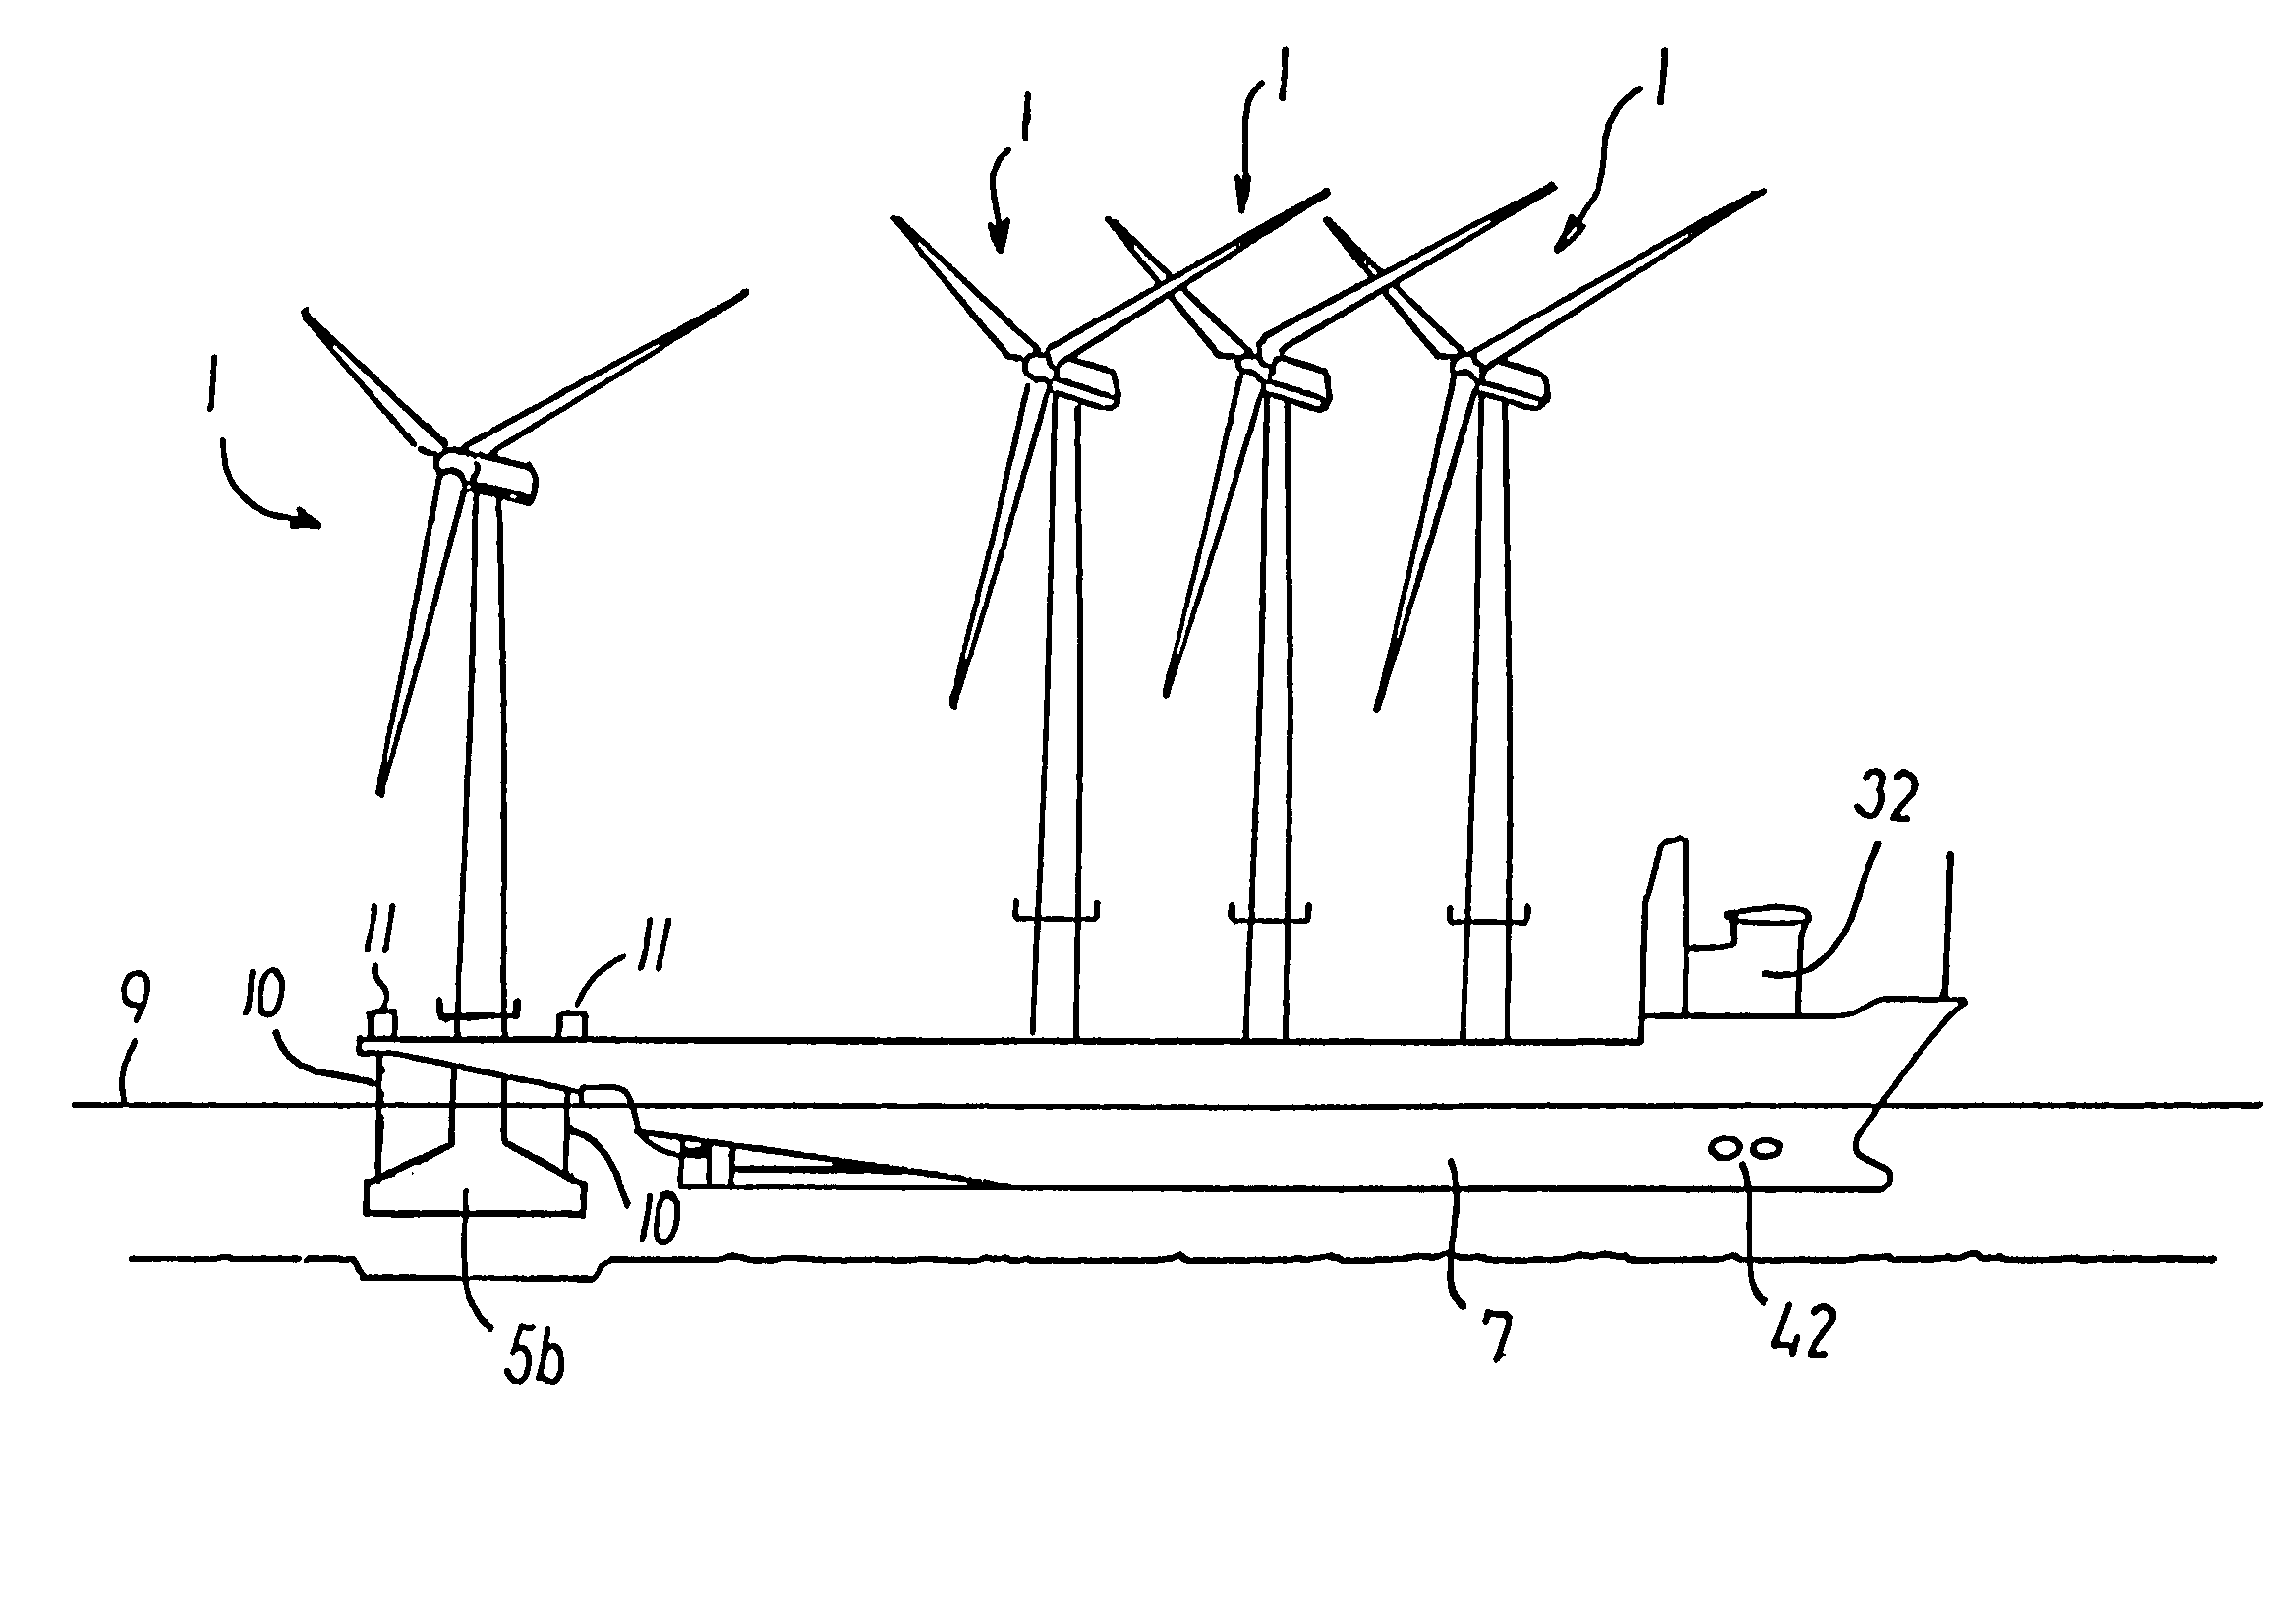 Vessel for transporting wind turbines, methods of moving a wind turbine, and a wind turbine for an off-shore wind farm